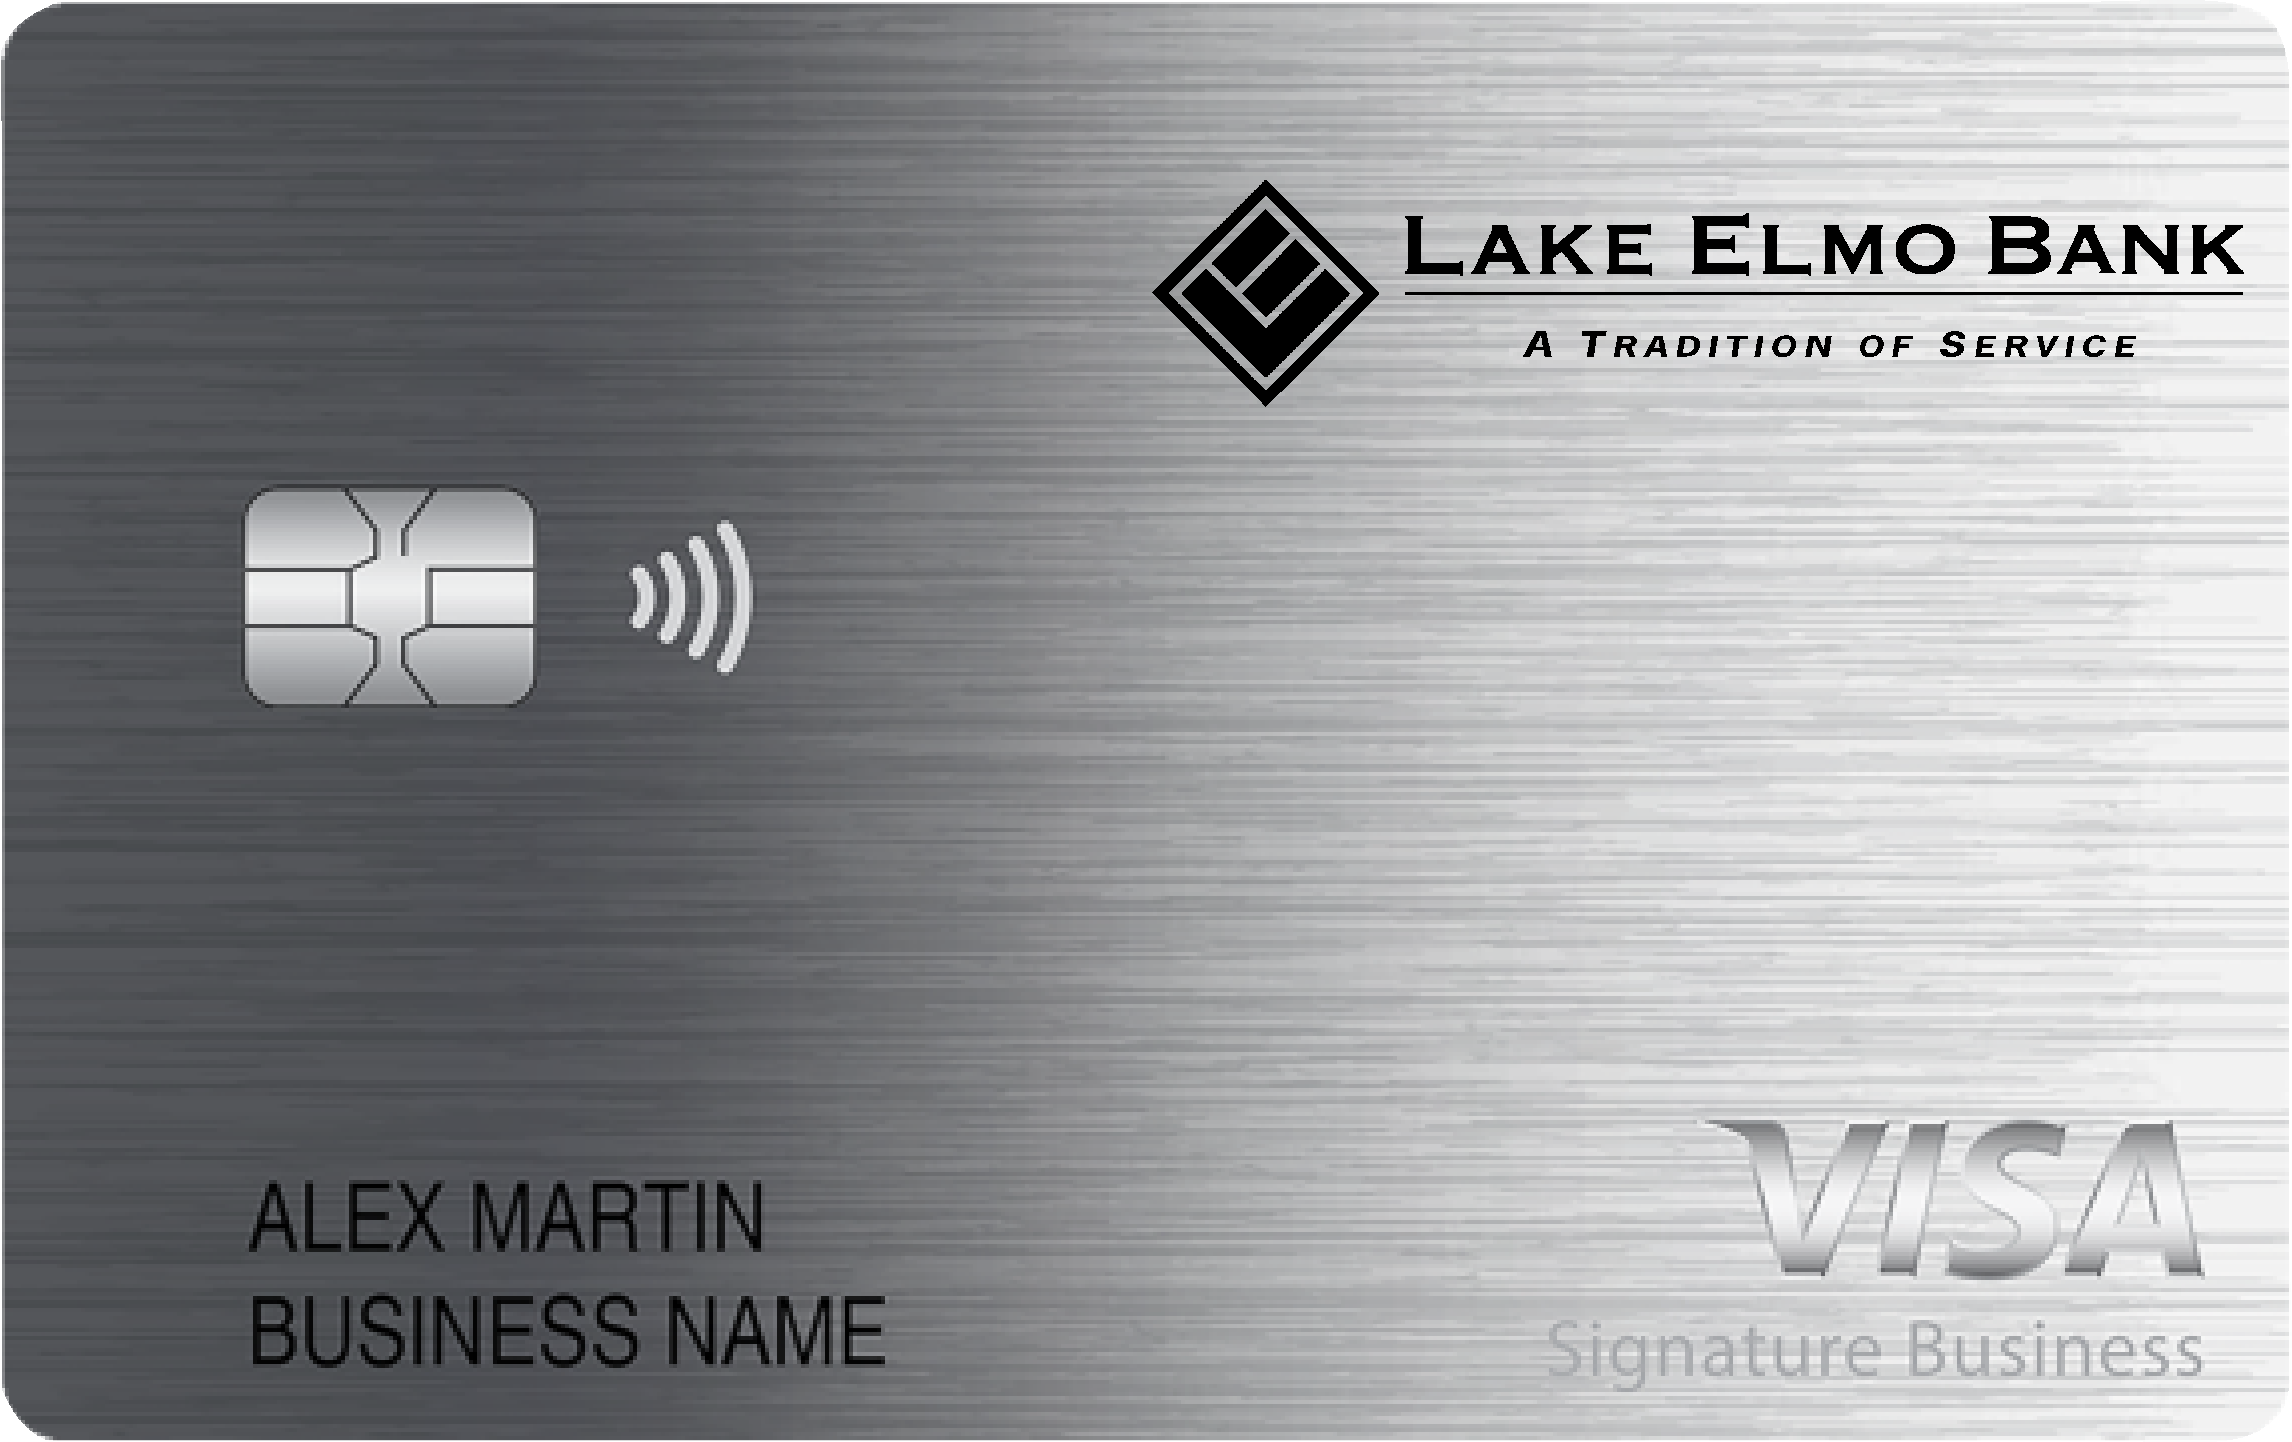 Lake Elmo Bank Smart Business Rewards Card